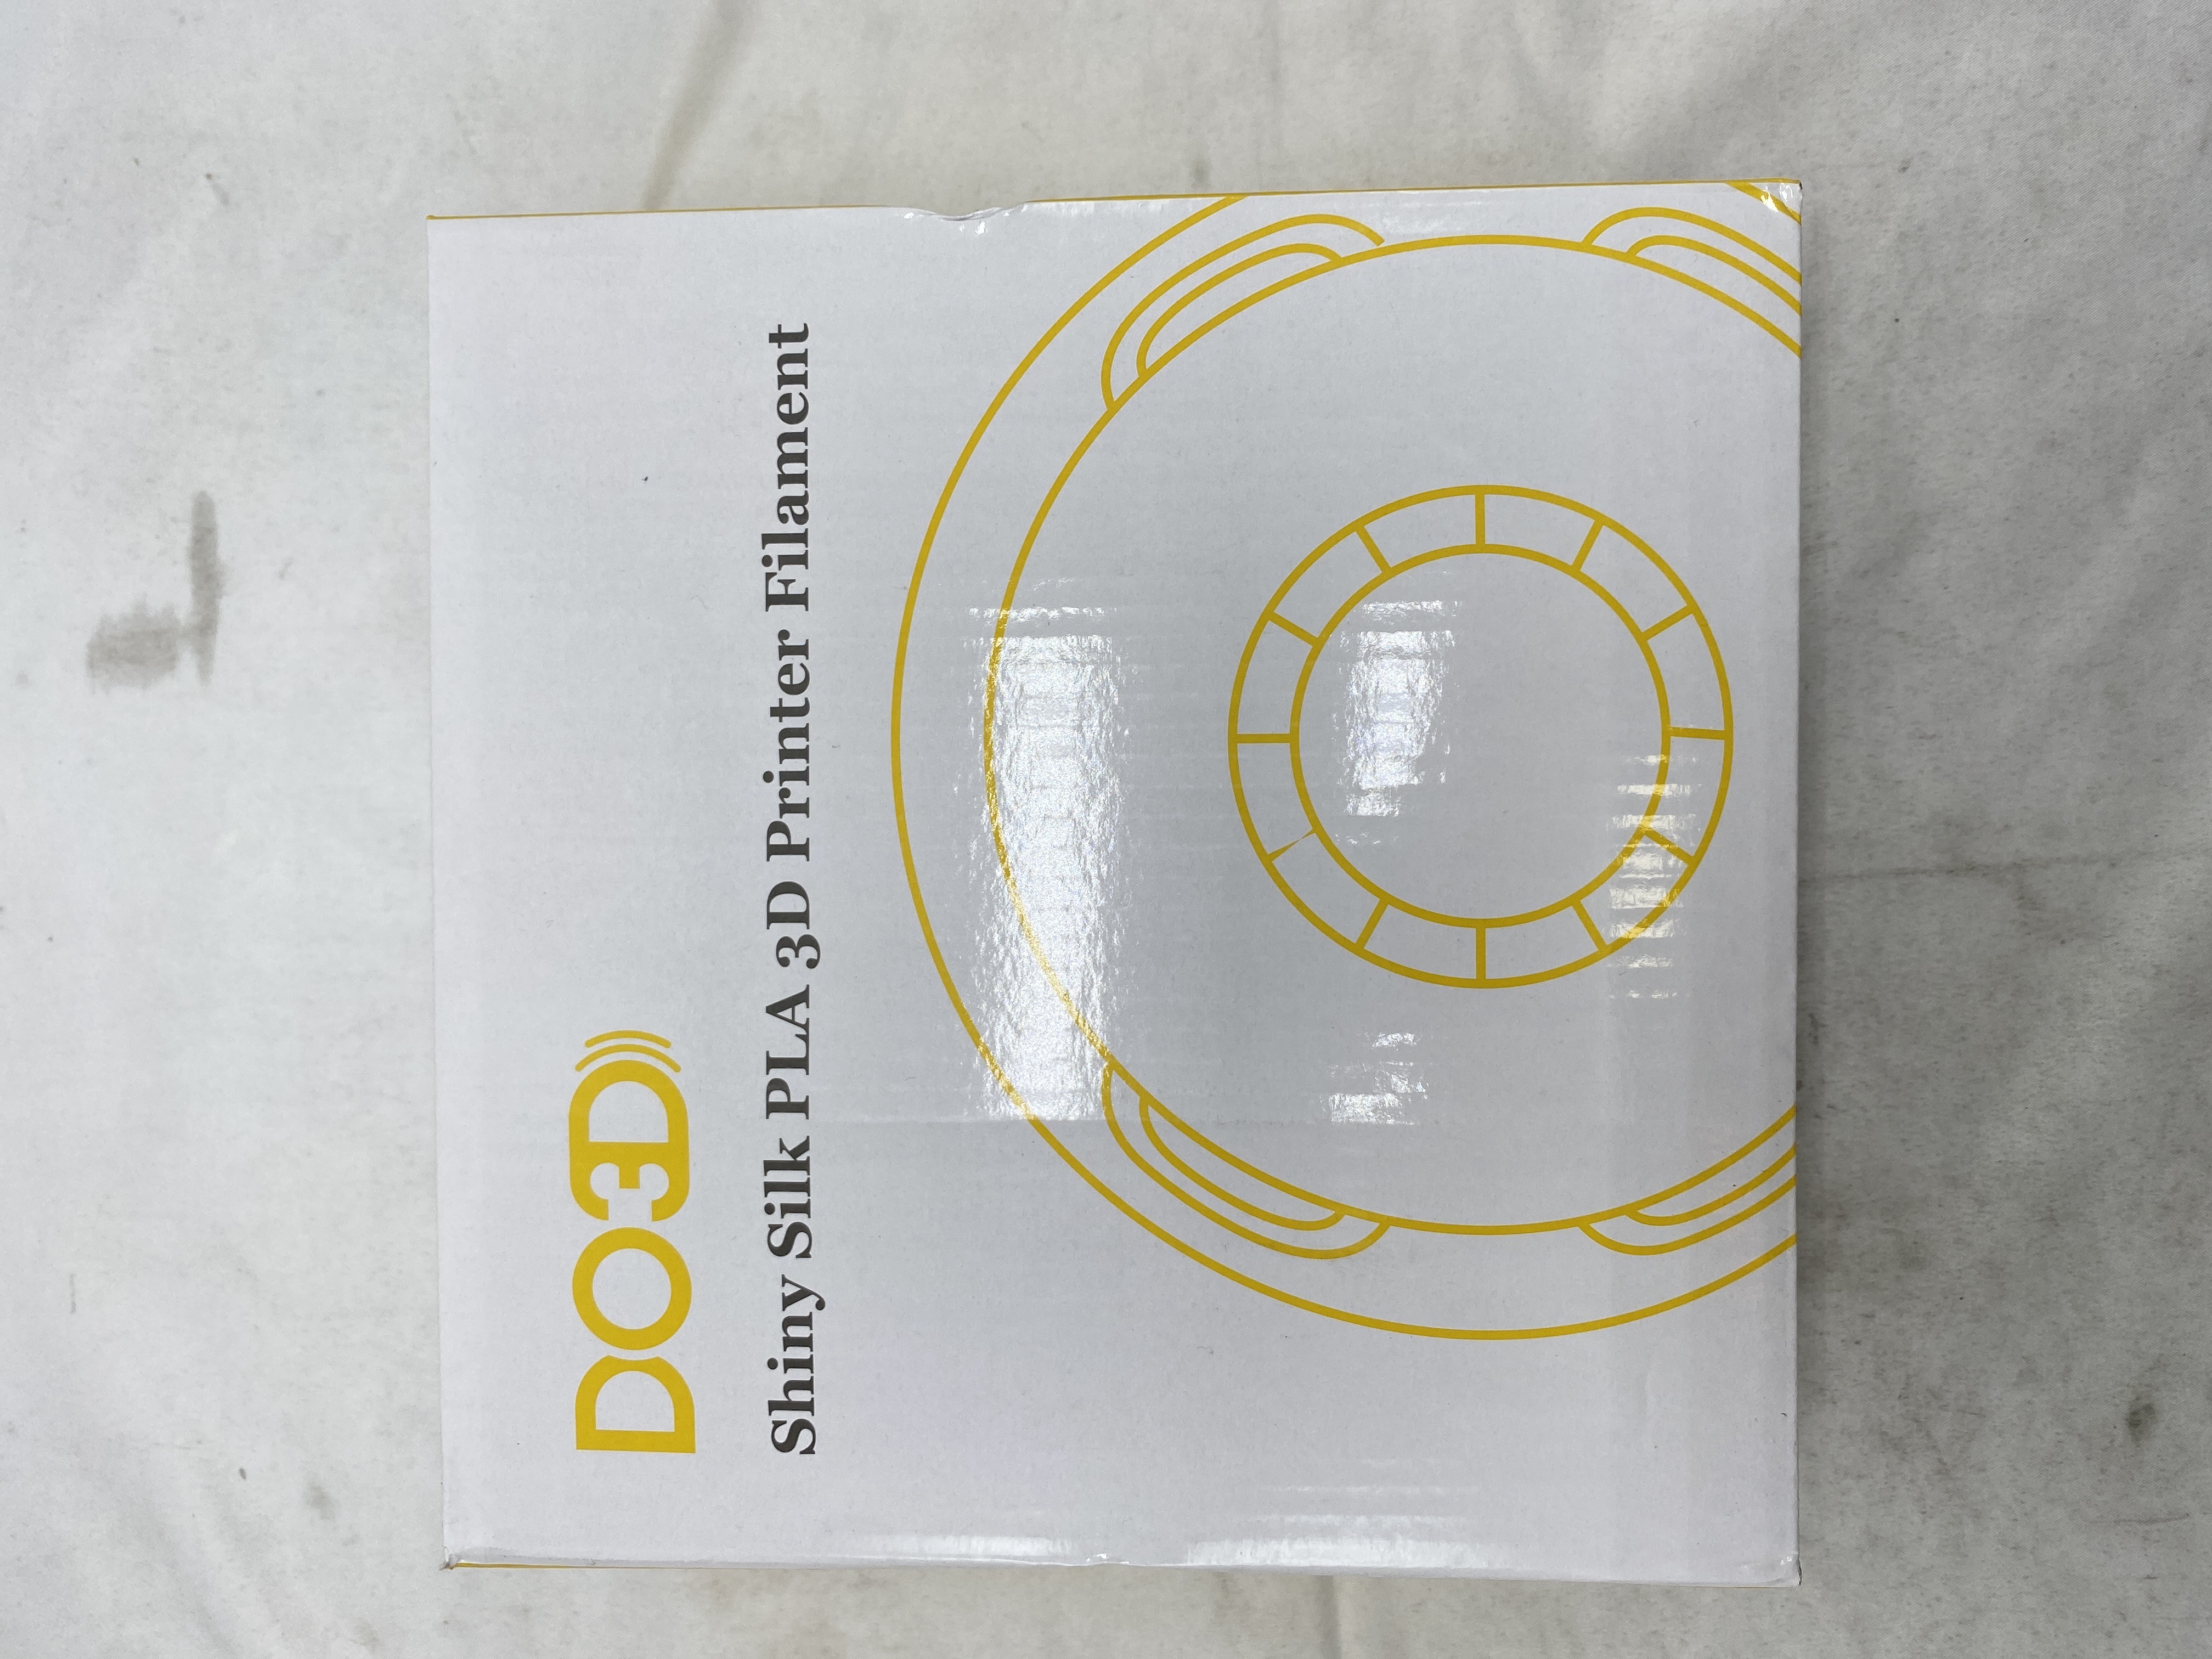 Photo 3 of DO3D Silk Pearl White PLA Satin Shiny 3D Printer Filament, 1.75mm Diameter 1kg/Spool 2.2lbs for FDM 3D Printers NEW